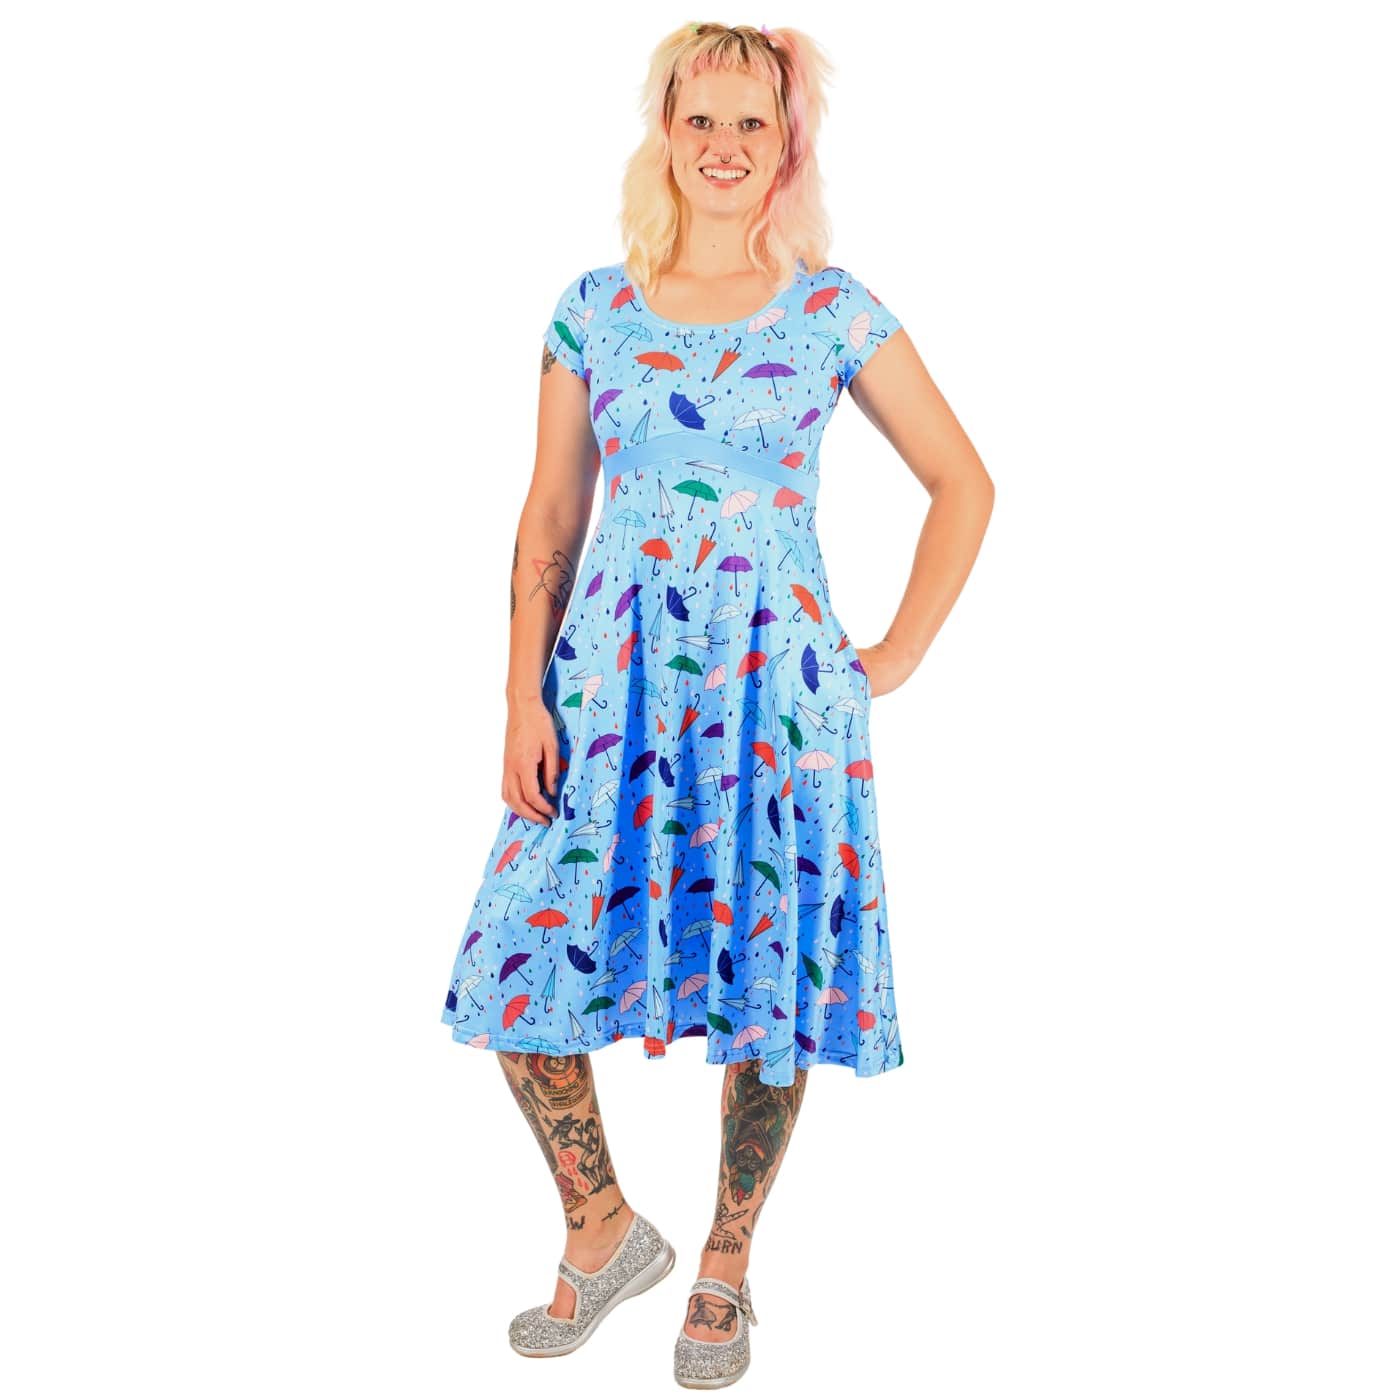 Brolly Tea Dress by RainbowsAndFairies.com (Umbrella - Rain - Raindrops - Dress With Pockets - Rockabilly - Vintage Inspired) - SKU: CL_TEADR_BROLL_ORG - Pic 03